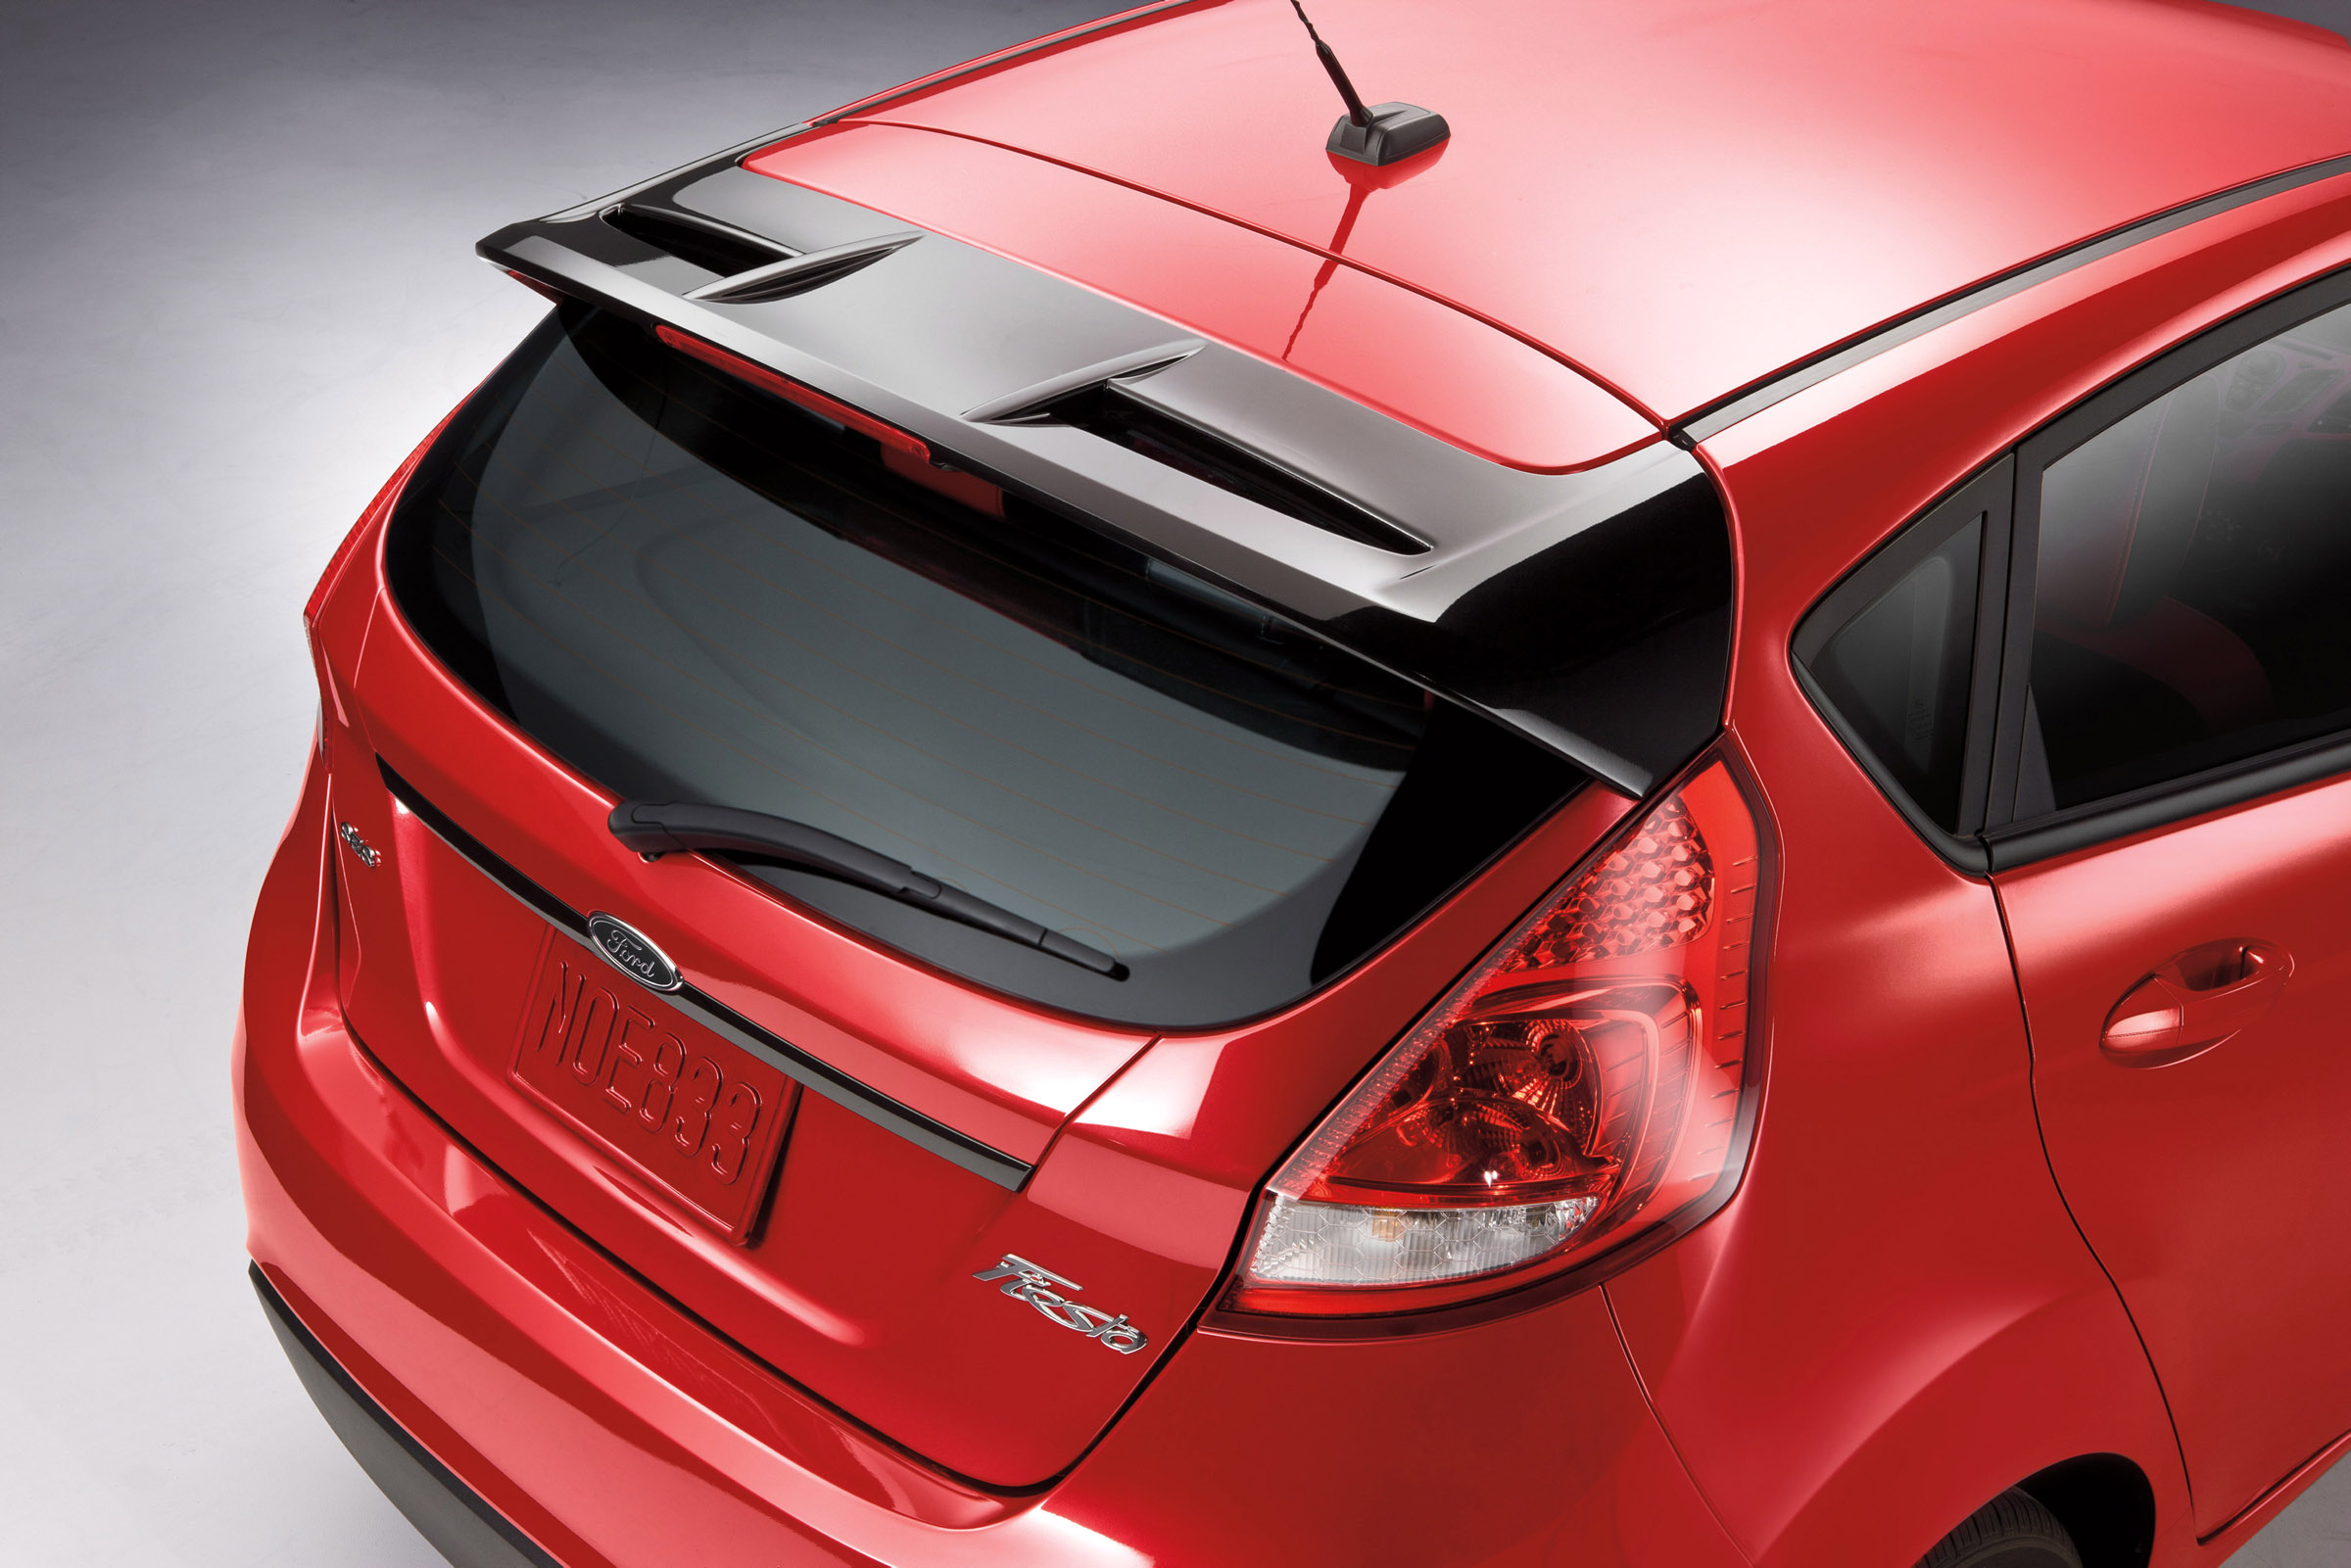 2012 Ford Fiesta, High-Resolution Image, Impressive Design, Cutting-Edge Technology, 2400x1610 HD Desktop